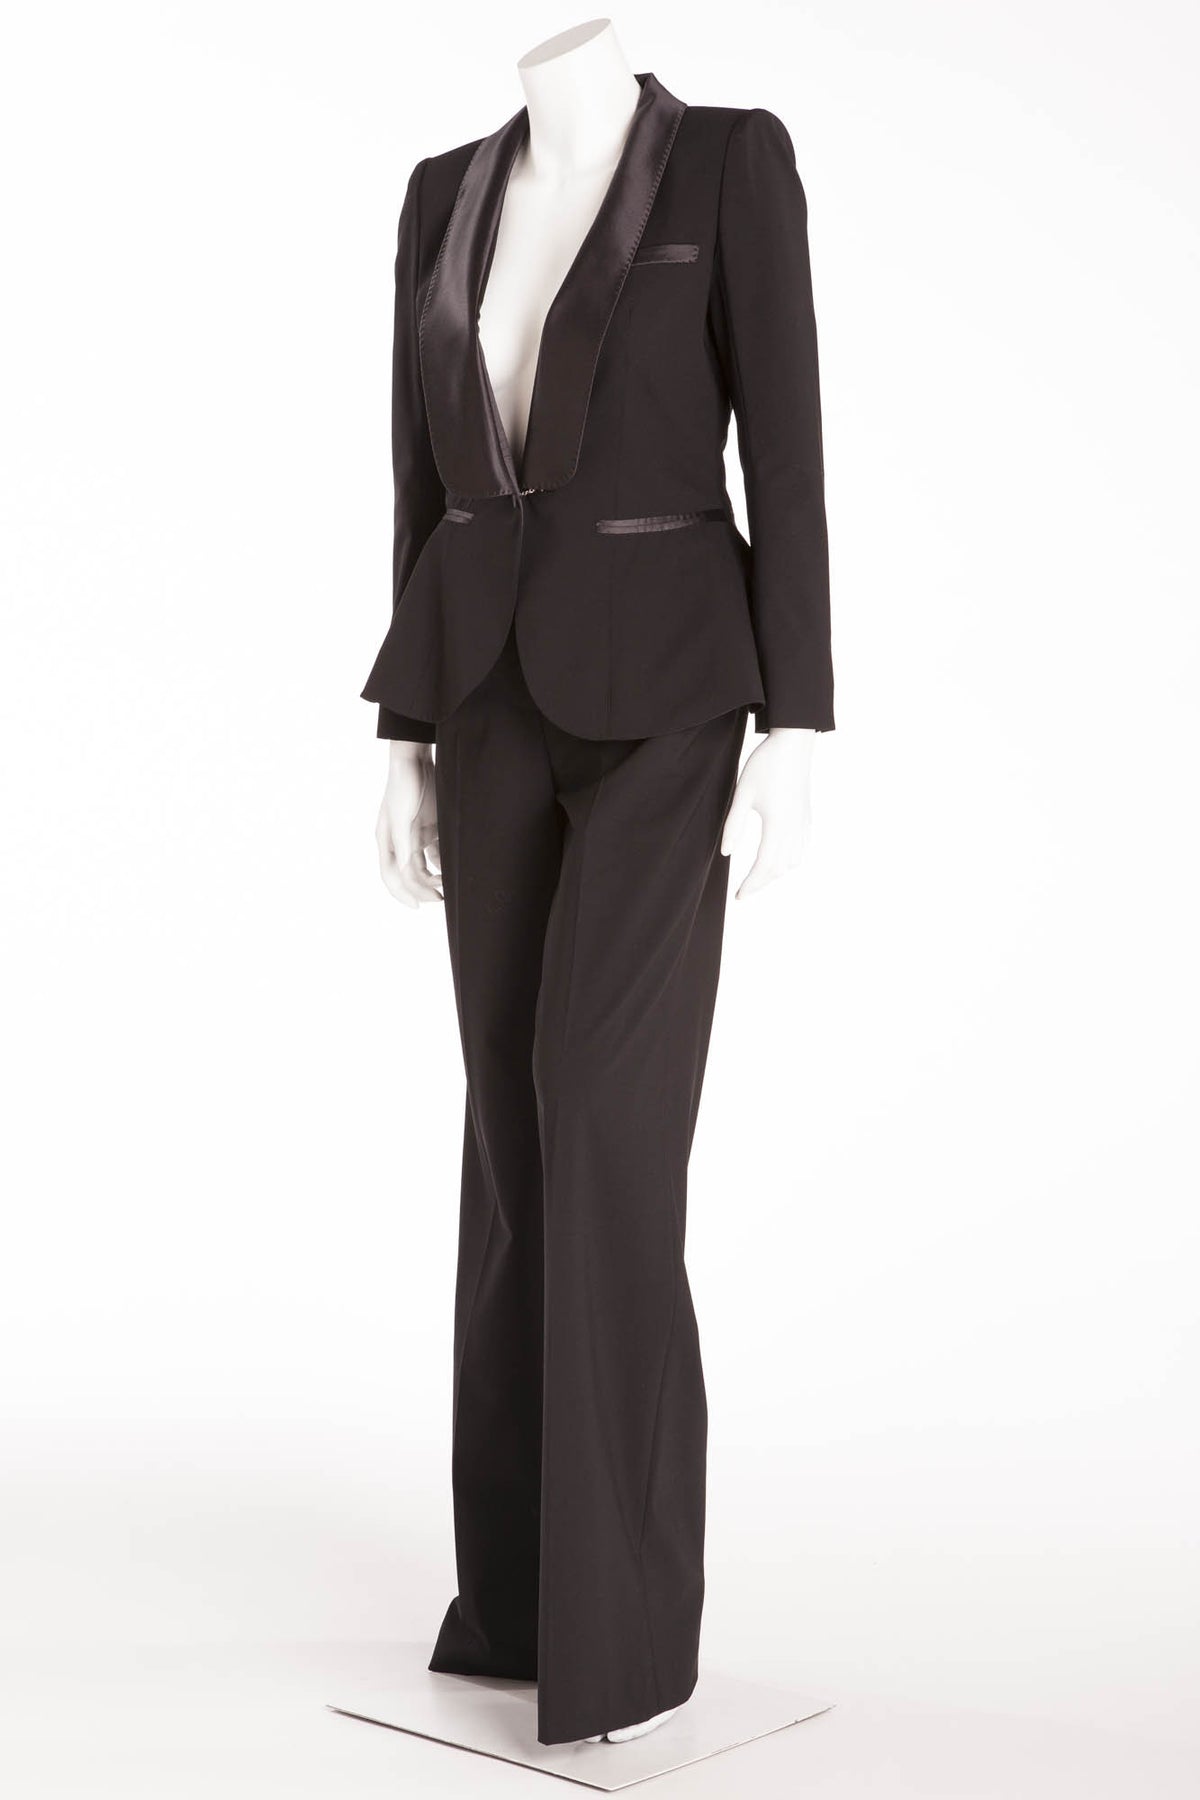 Louis Vuitton - New 2PC Black Blazer & Dress Pants with Satin Trim - FR 38